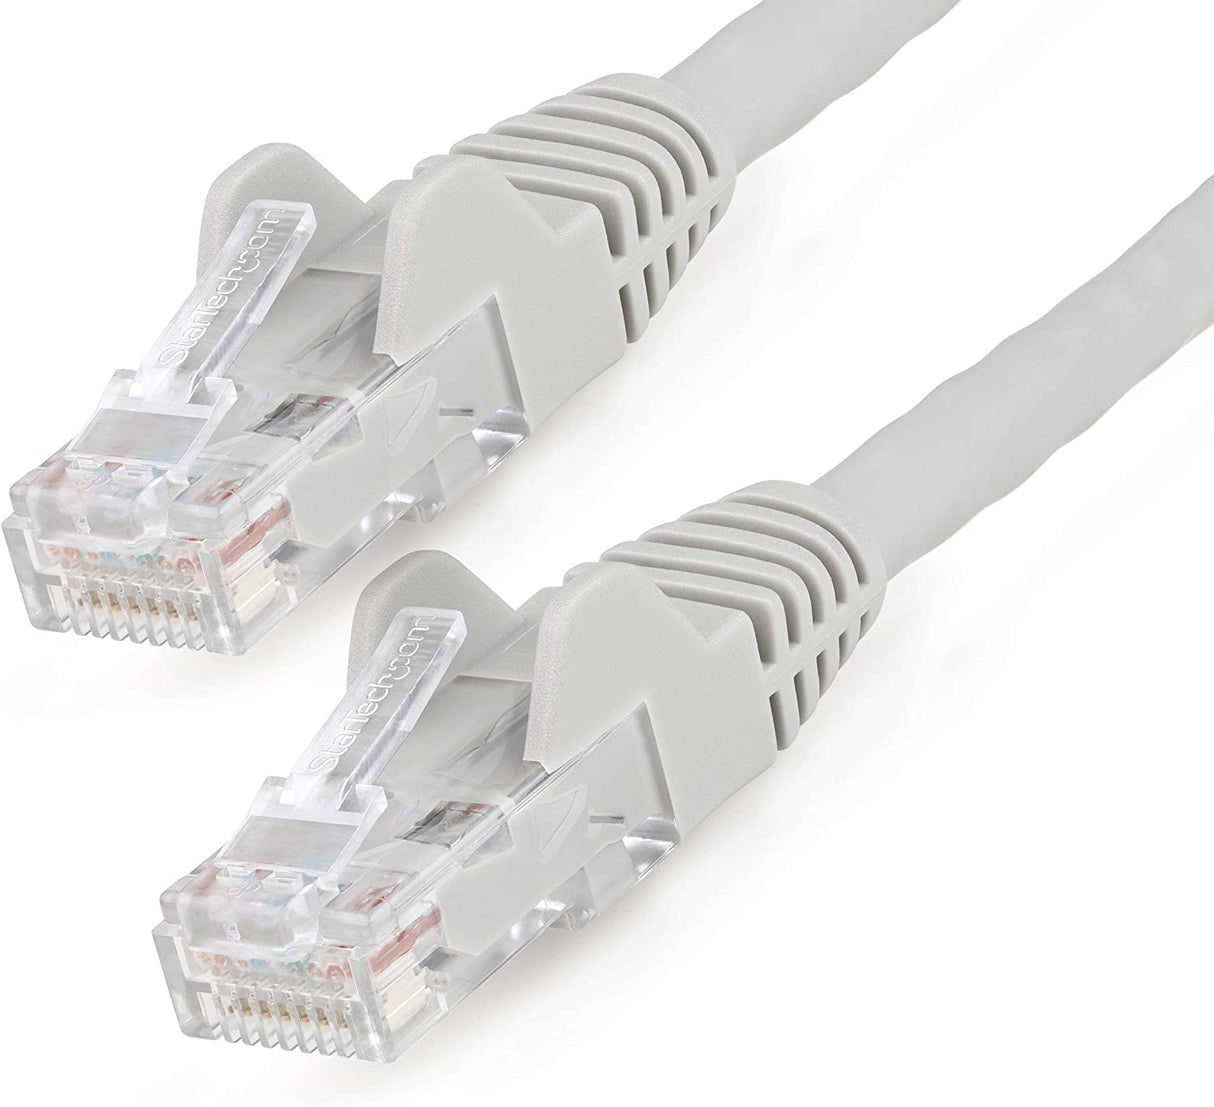 StarTech.com 35ft (10.7m) CAT6 Ethernet Cable - LSZH (Low Smoke Zero Halogen) - 10 Gigabit 650MHz 100W PoE RJ45 UTP Network Patch Cord Snagless w/Strain Relief - Gray CAT 6 ETL Verified (N6LPATCH35GR) 35 ft Gray